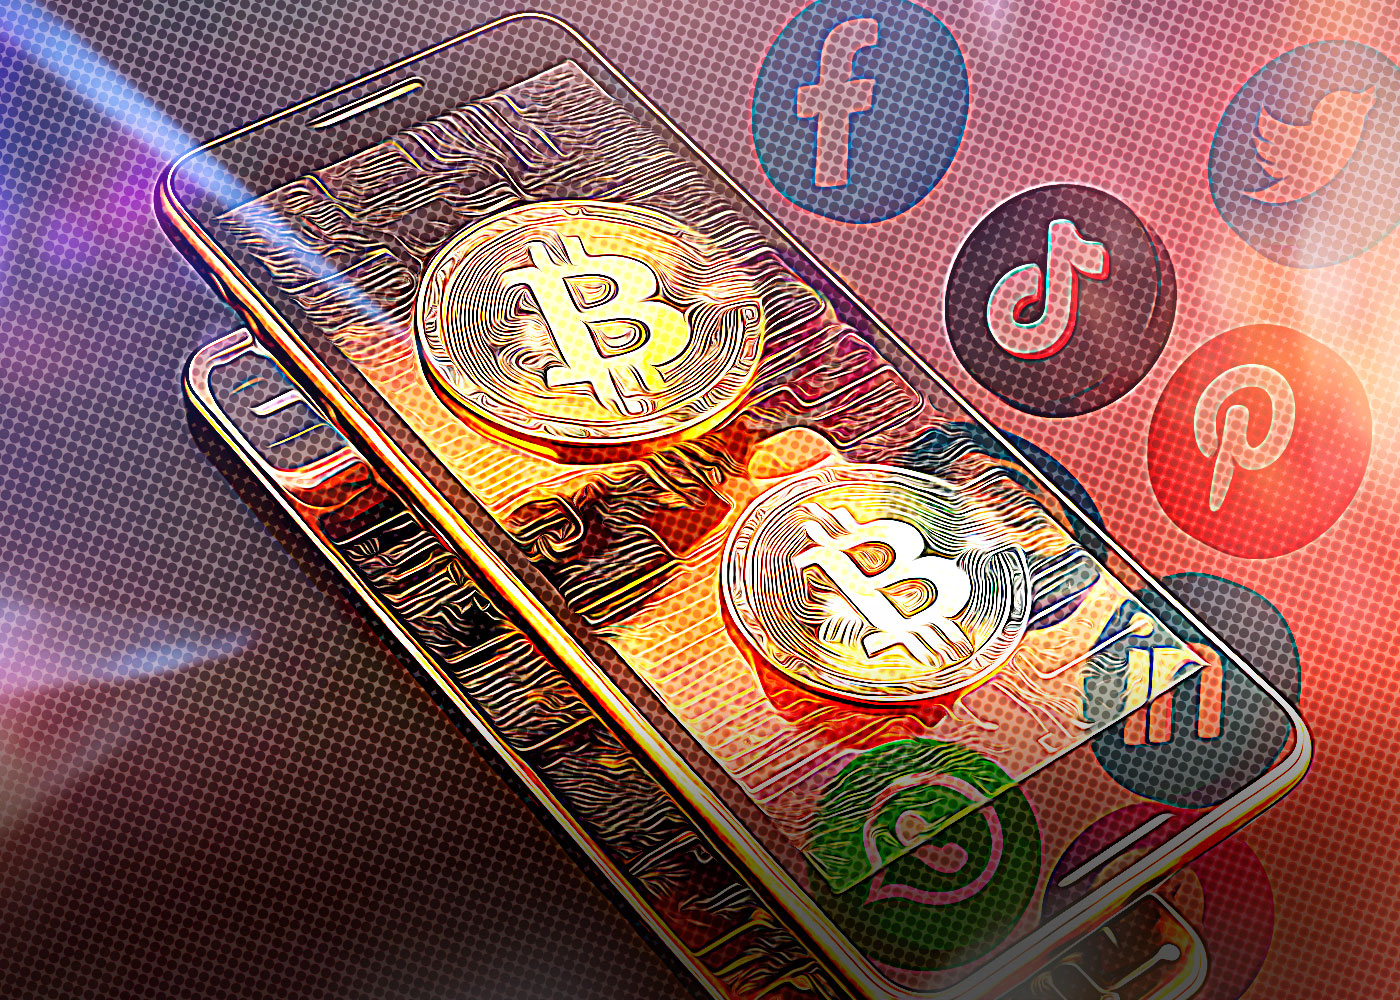 European Consumer Group Urges Stronger Crypto Advertising Regulations on Social Media Platforms